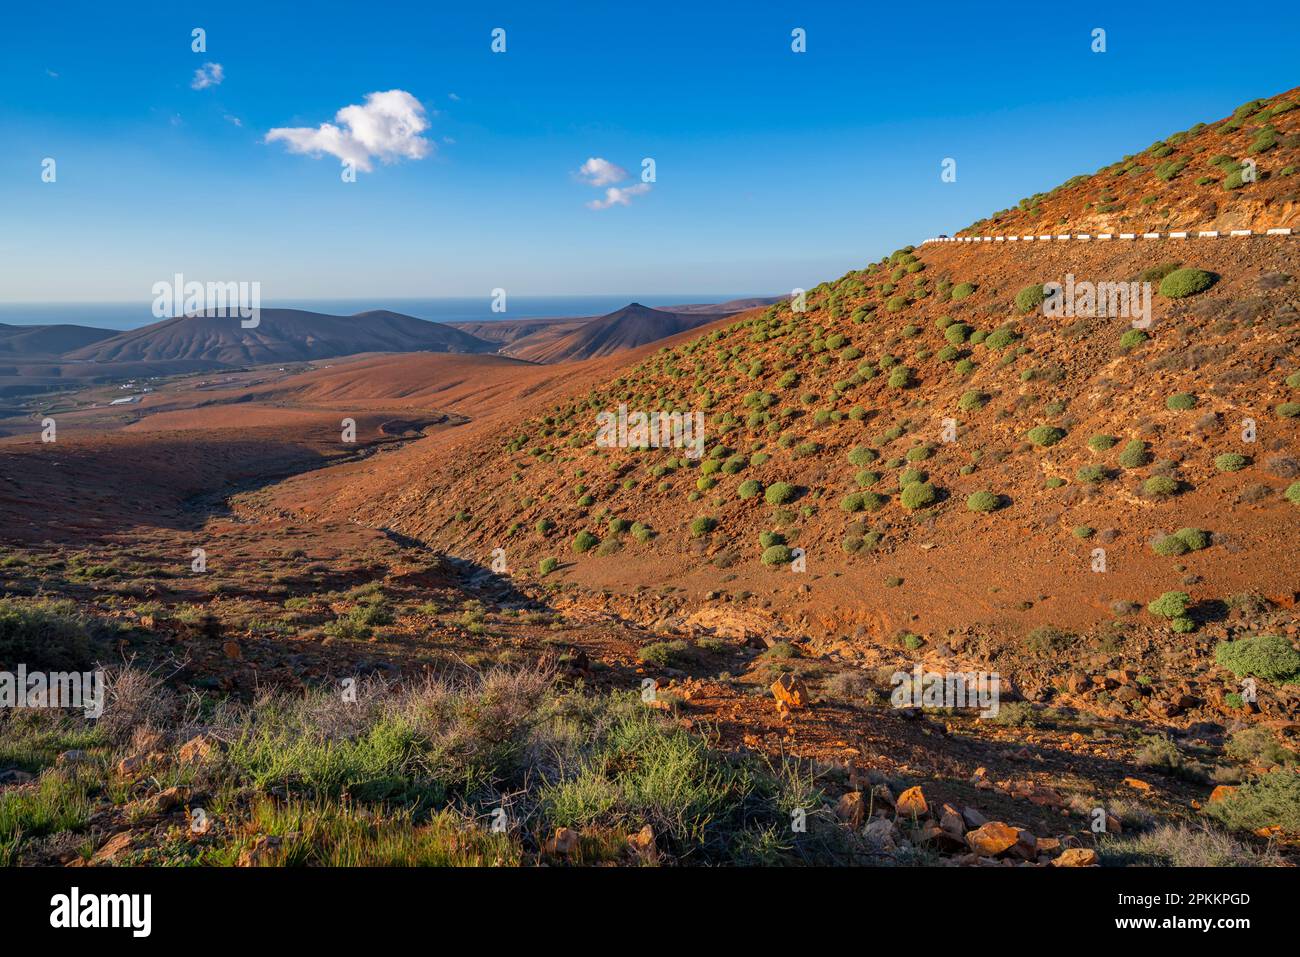 View of landscape from near Mirador de Las Penitas view point, Betancuria, Fuerteventura, Canary Islands, Spain, Atlantic, Europe Stock Photo